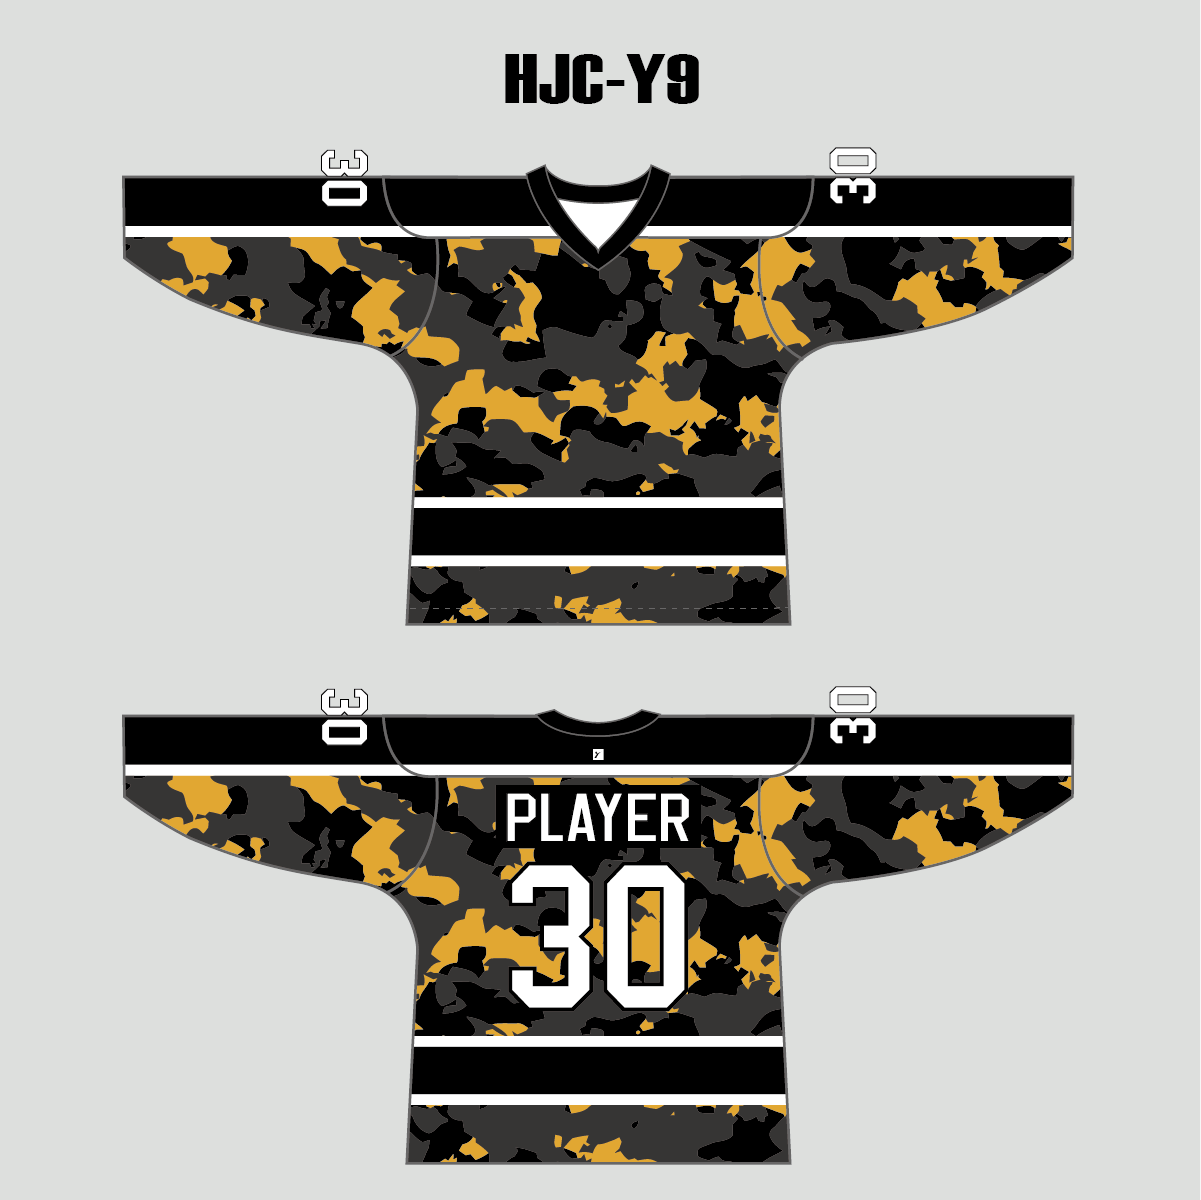 Yellow Gray Black Camouflage Custom Made Hockey Jerseys - YoungSpeeds